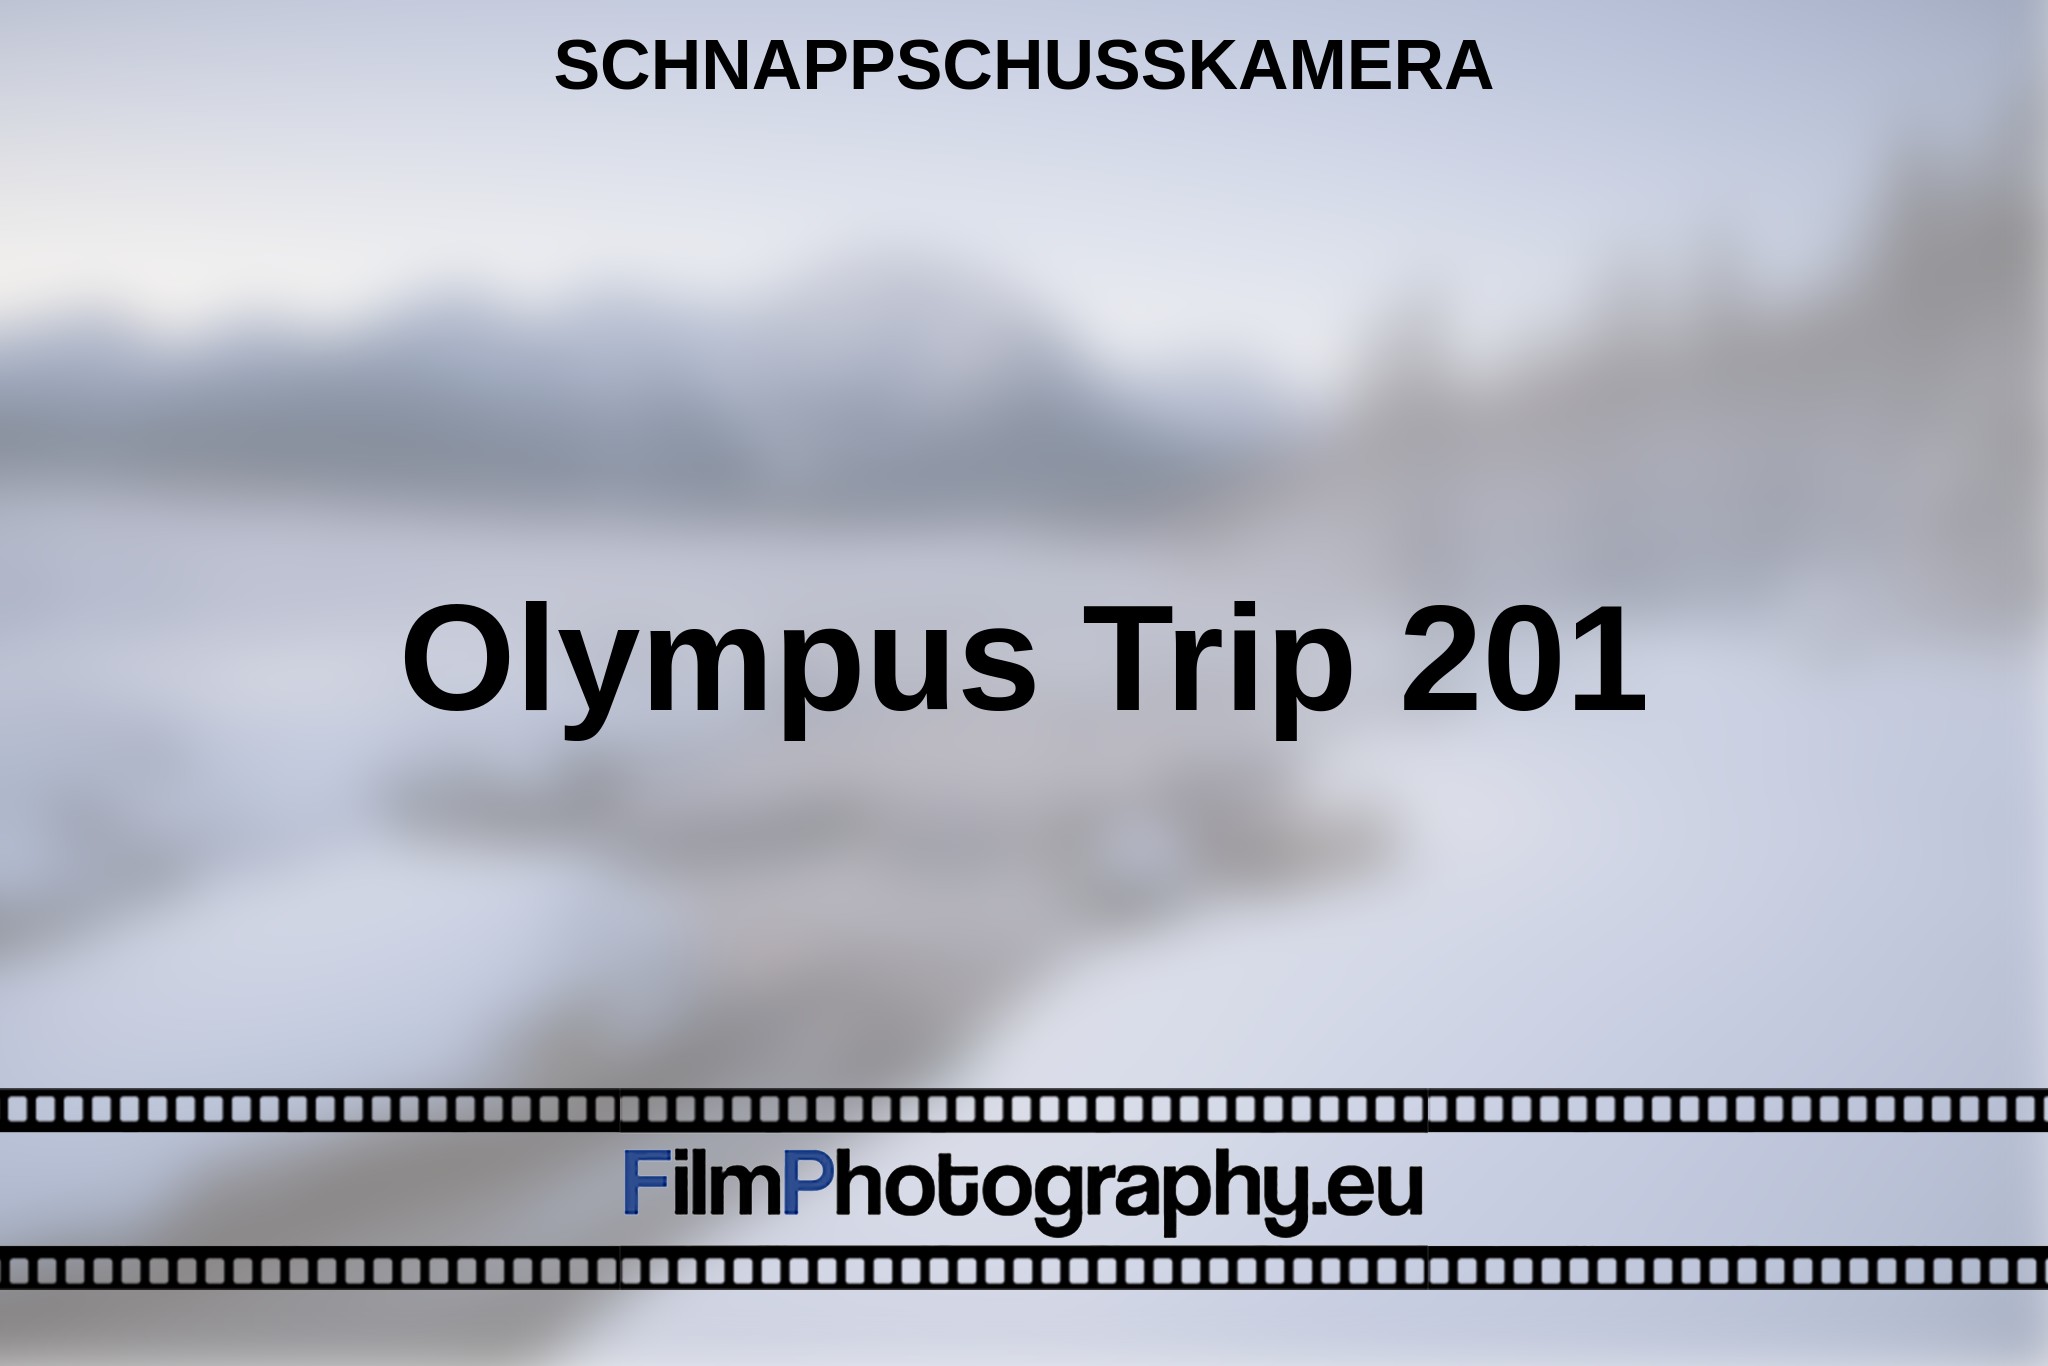 olympus-trip-201-schnappschusskamera-bnv.jpg